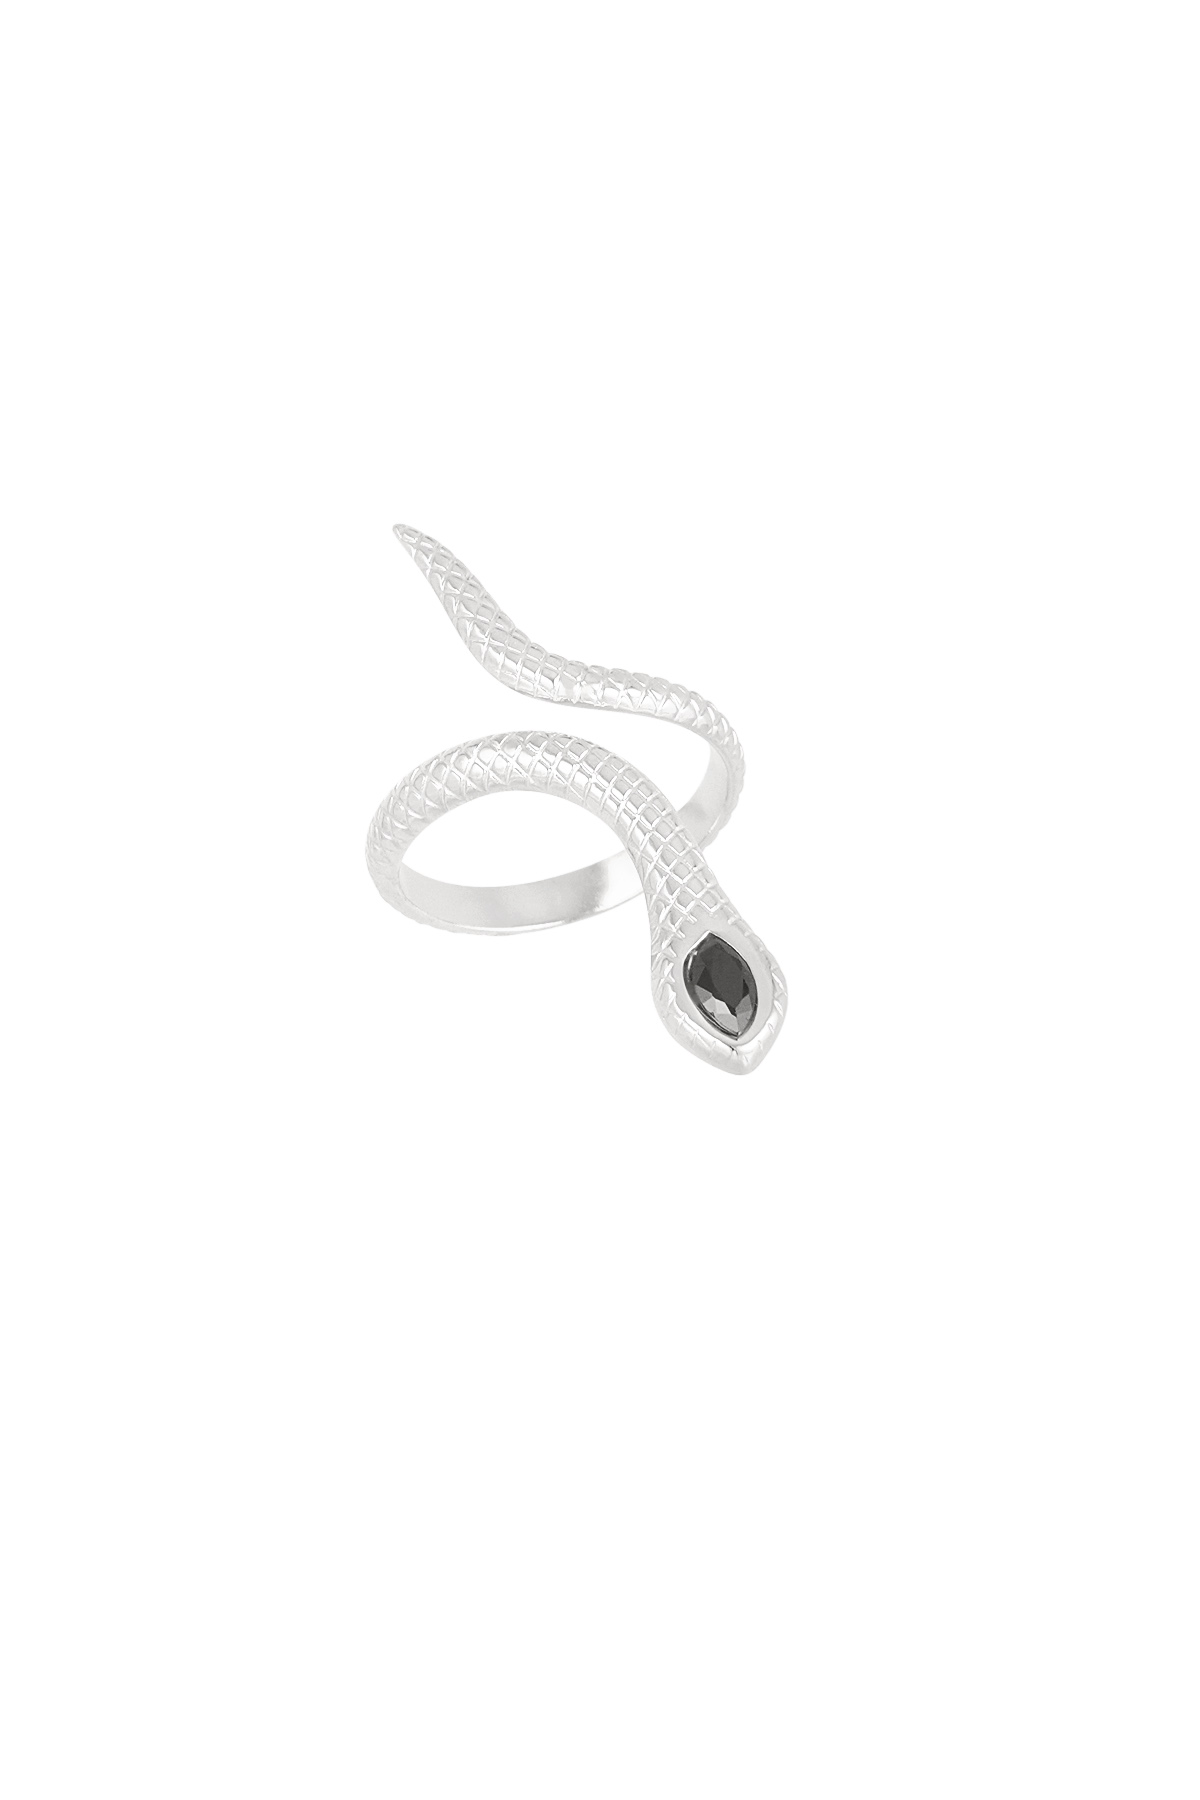 Kara yılan yüzüğü - gümüş  h5 Resim5